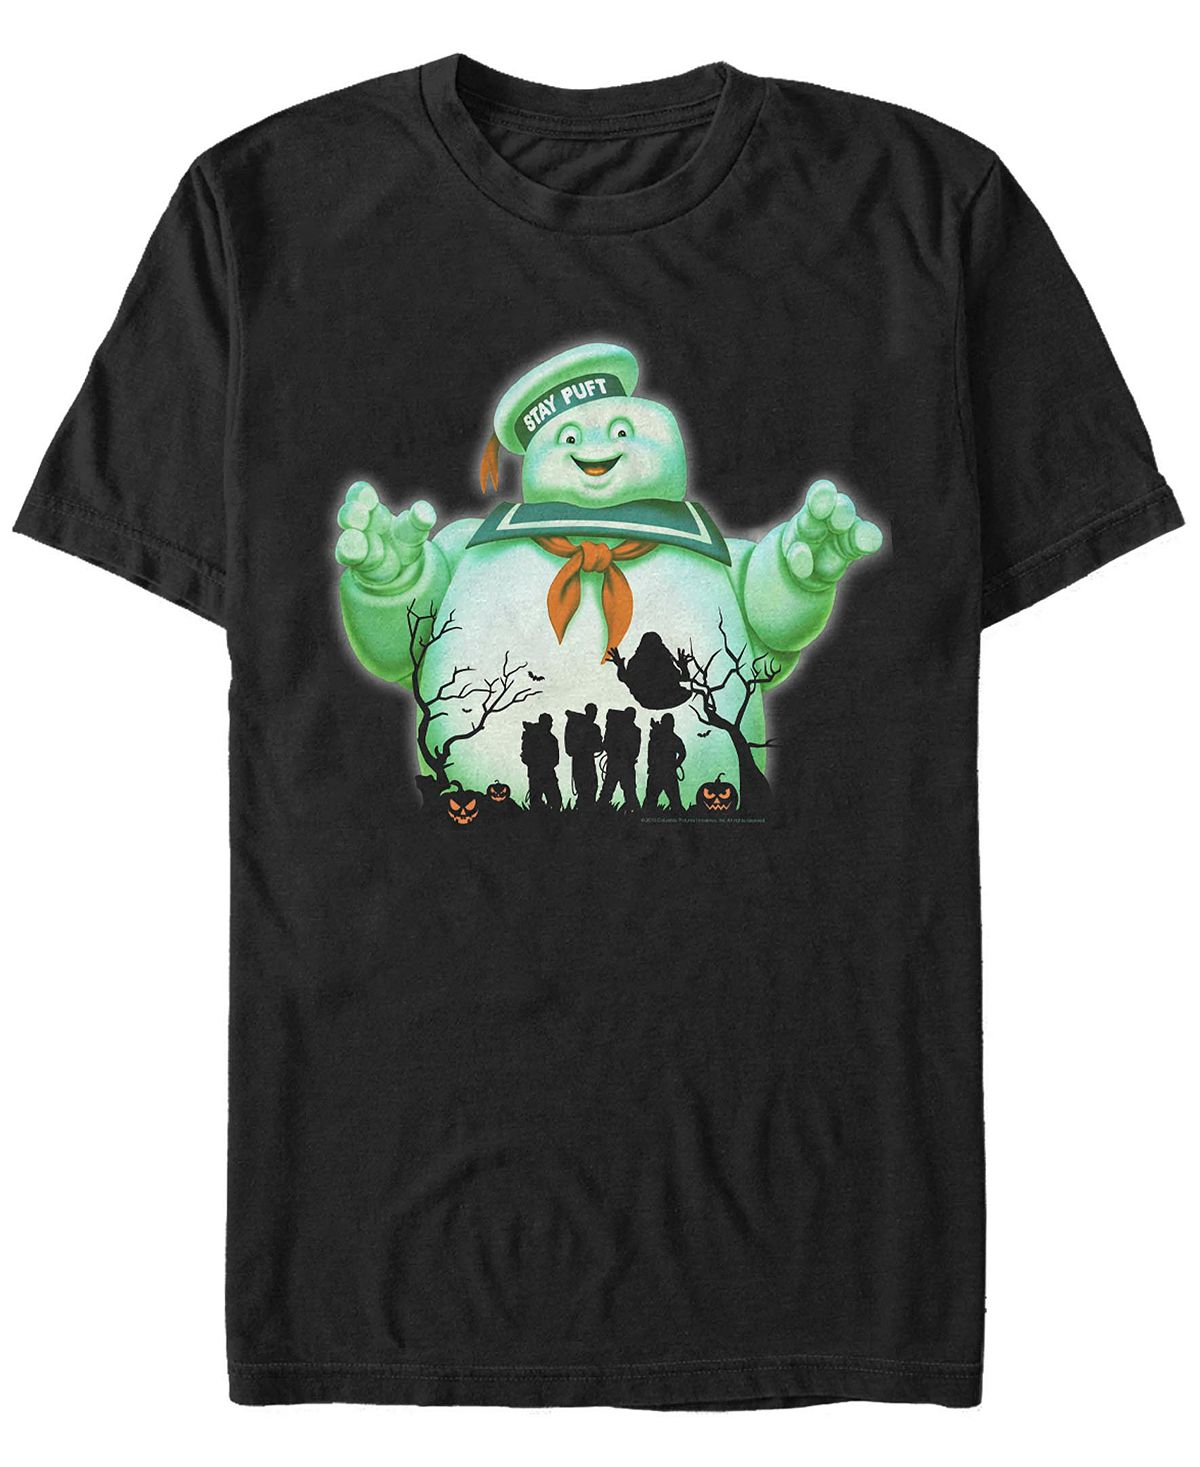 Мужская футболка с короткими рукавами на хэллоуин «охотники за привидениями» Fifth Sun, черный